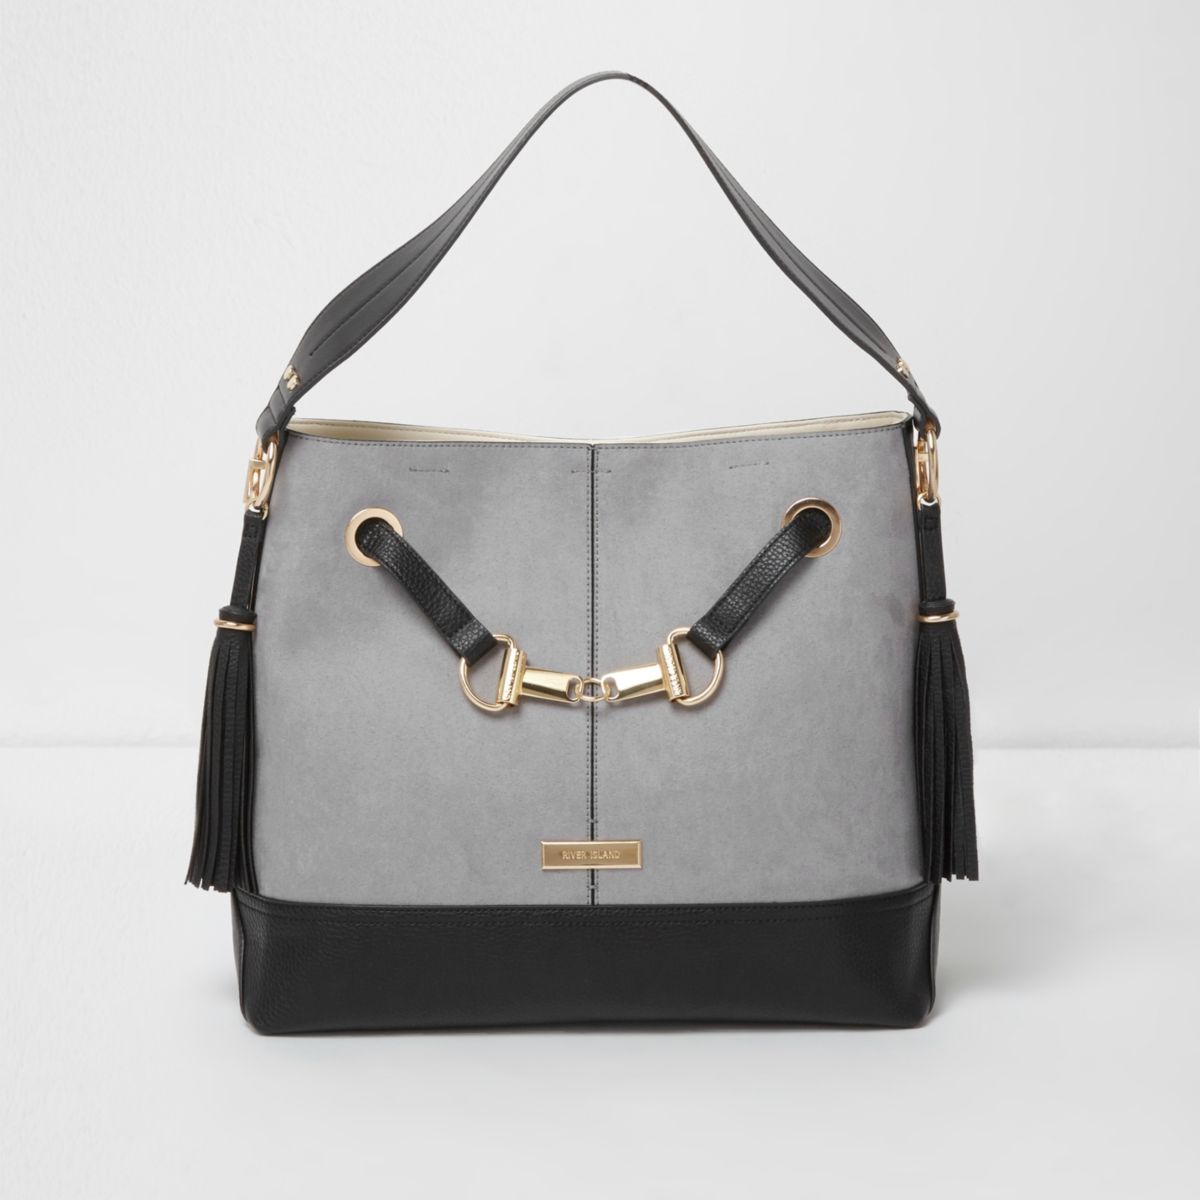 black and grey handbag 852982